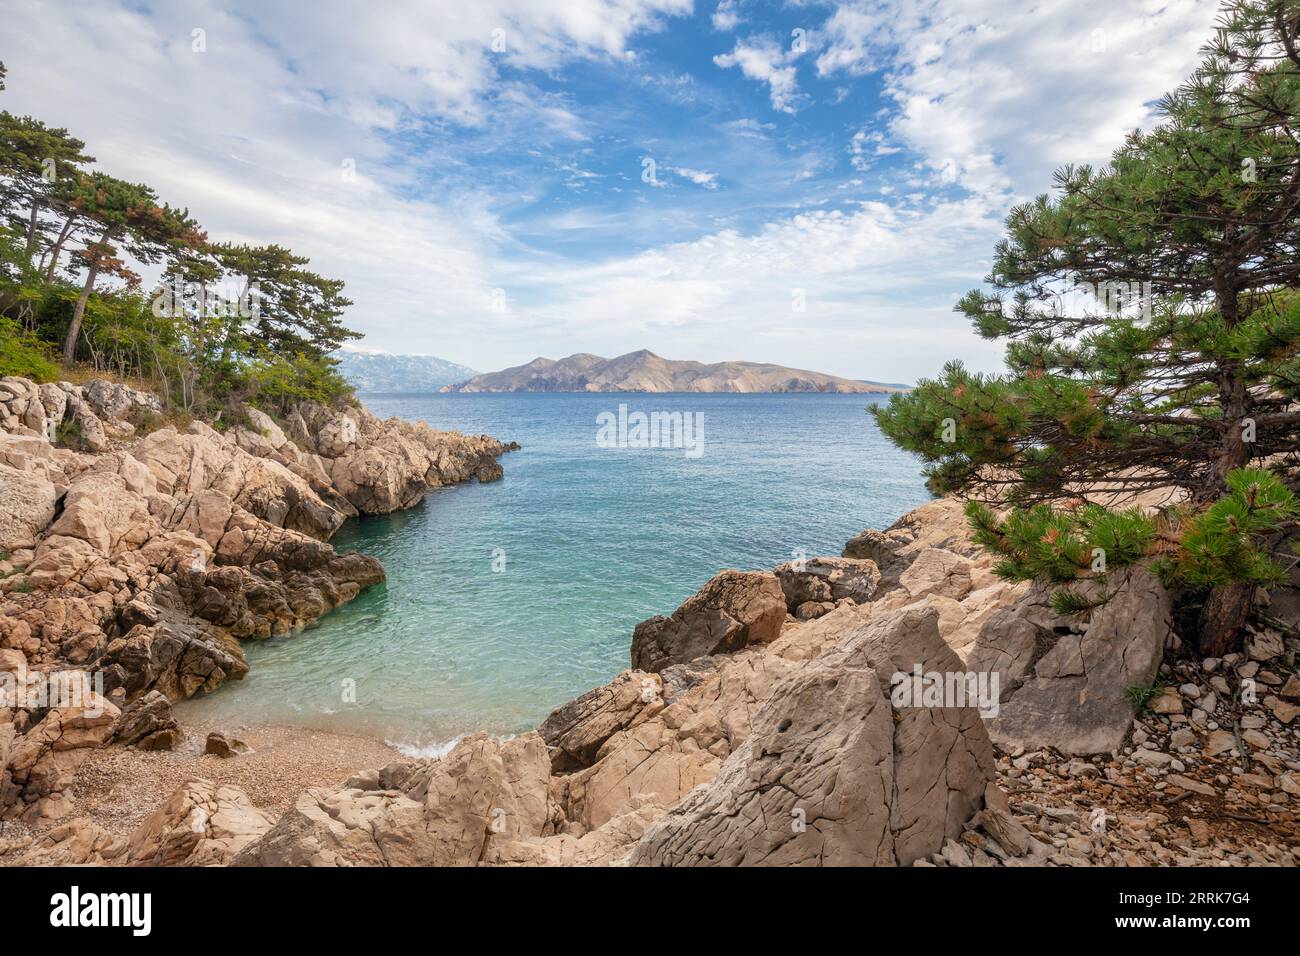 Kroatien, Primorje-Gorski Komitat Kotar, Insel Krk, Baska, die felsigen Klippen in der Nähe des Strandes Mali Raj und die Insel Prvic im Hintergrund Stockfoto